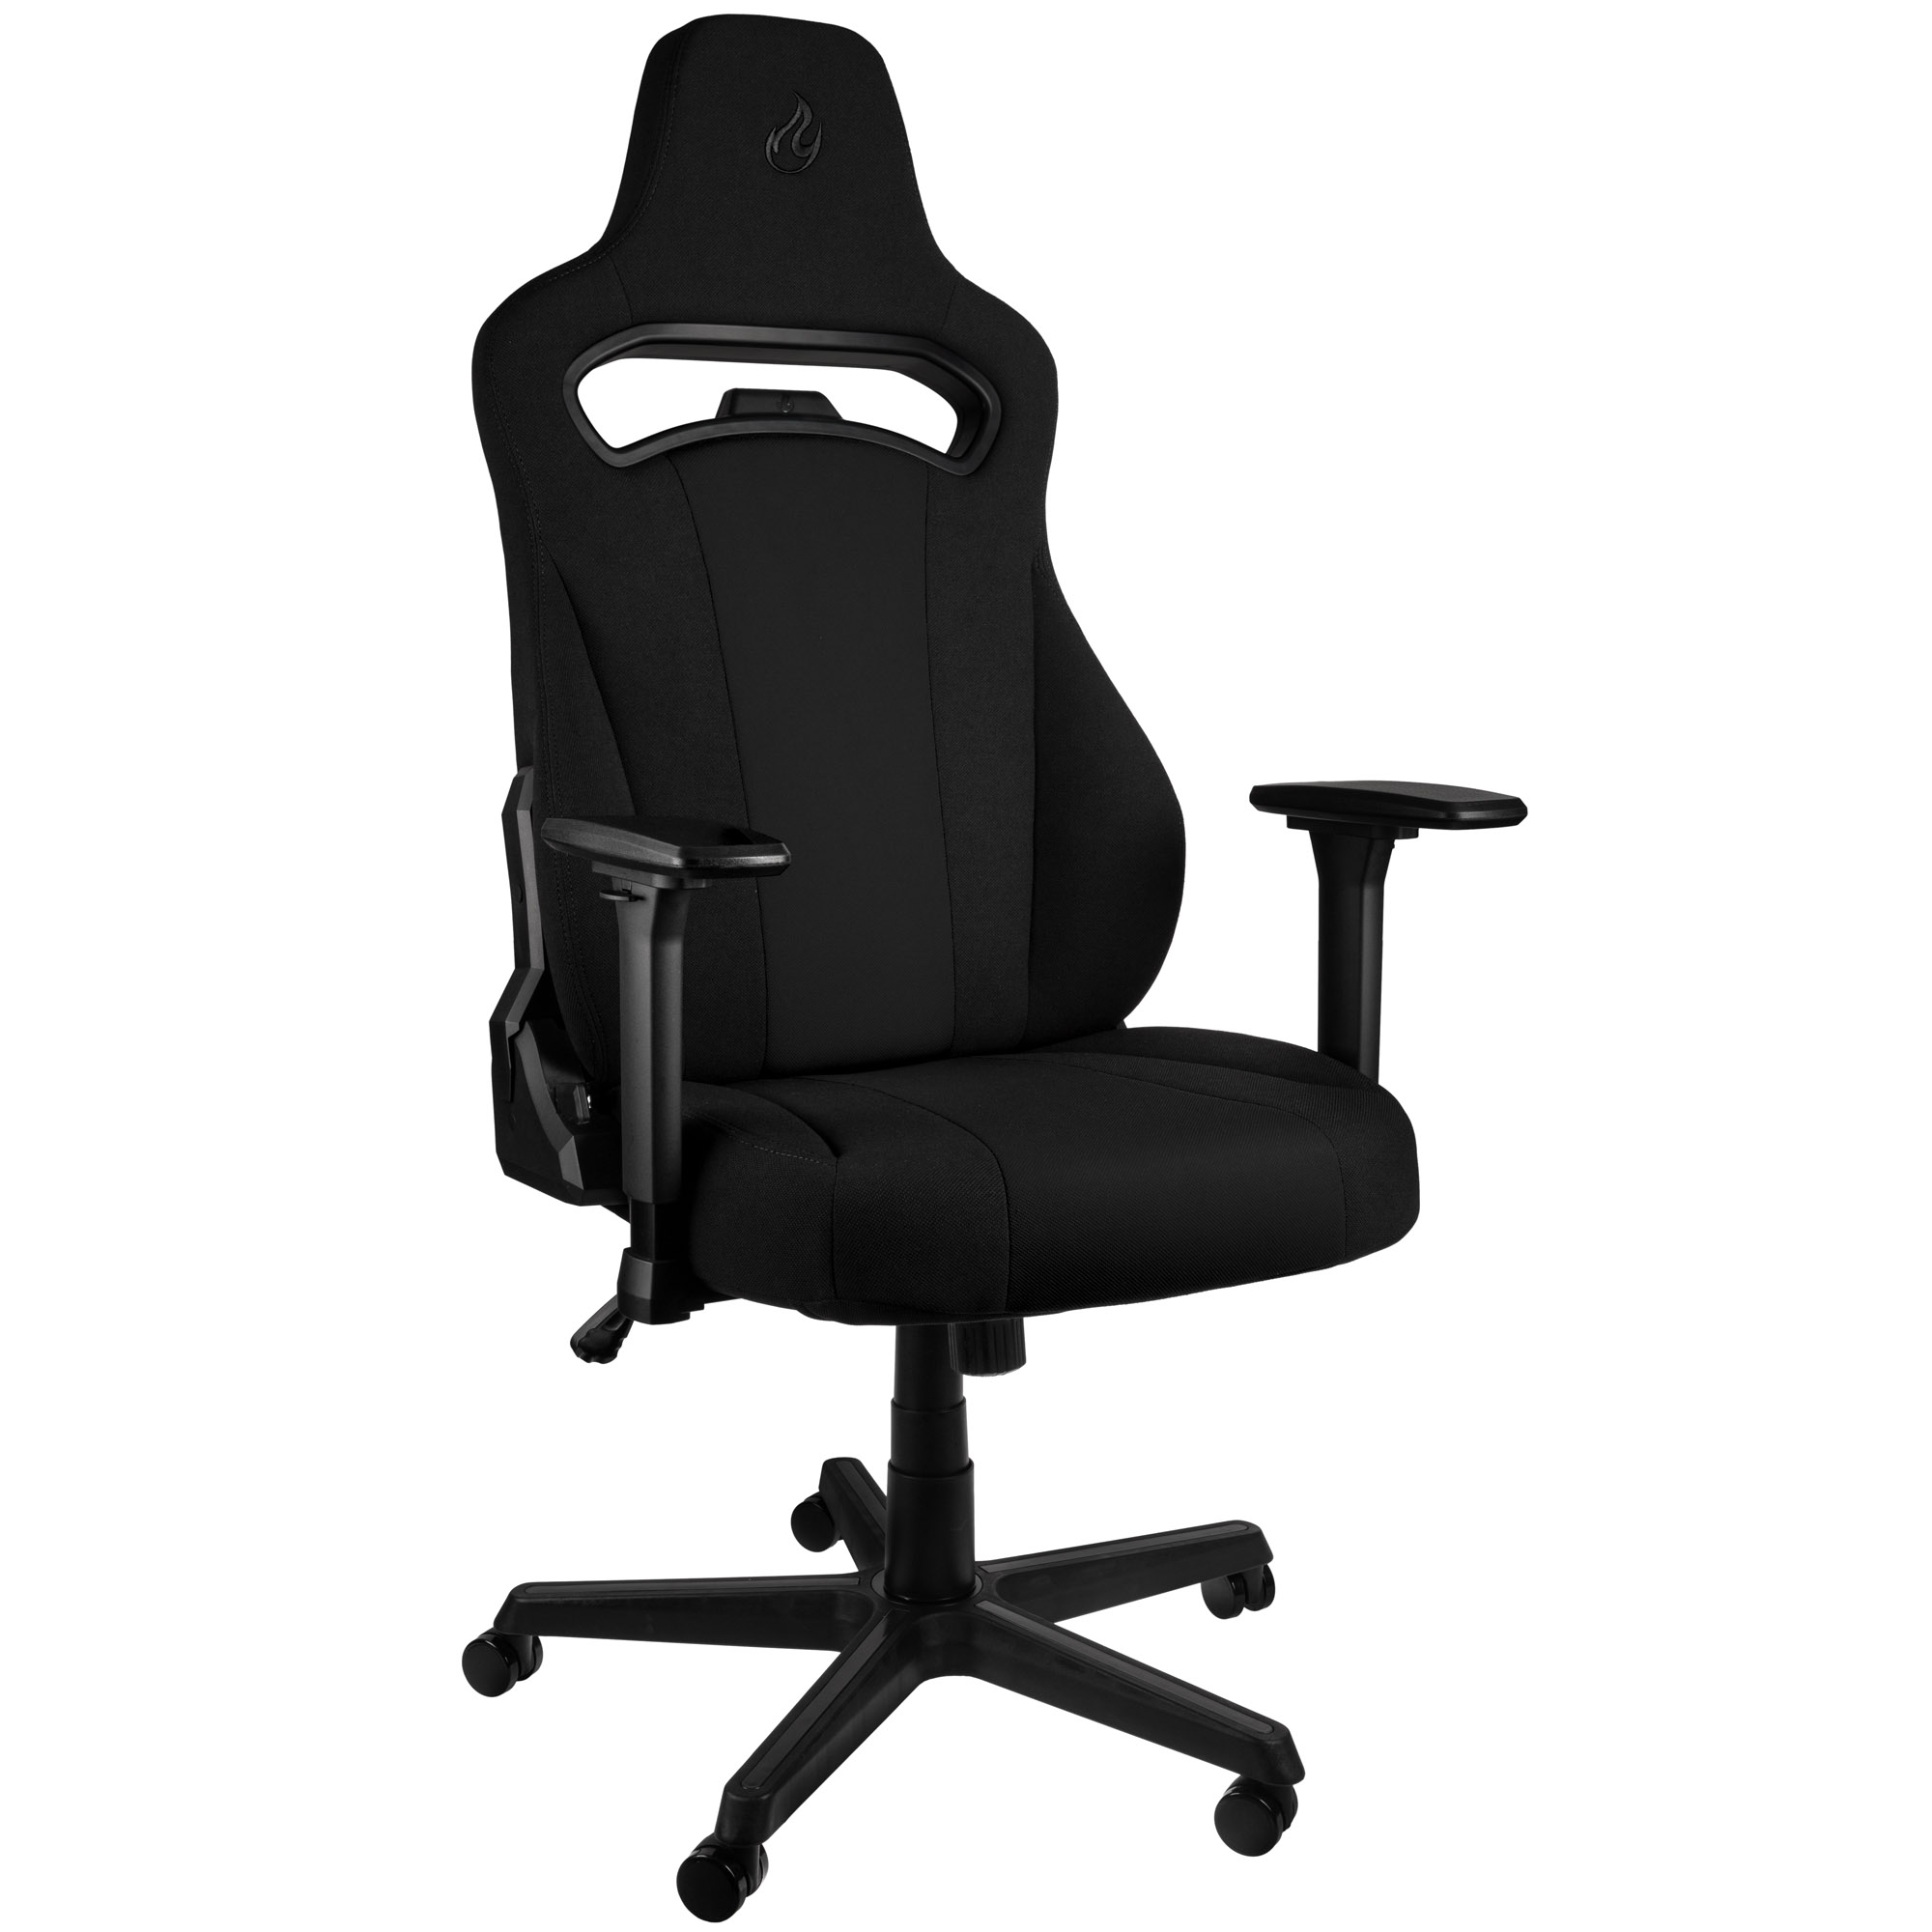 Nitro Concepts - E250 Gaming Chair Black